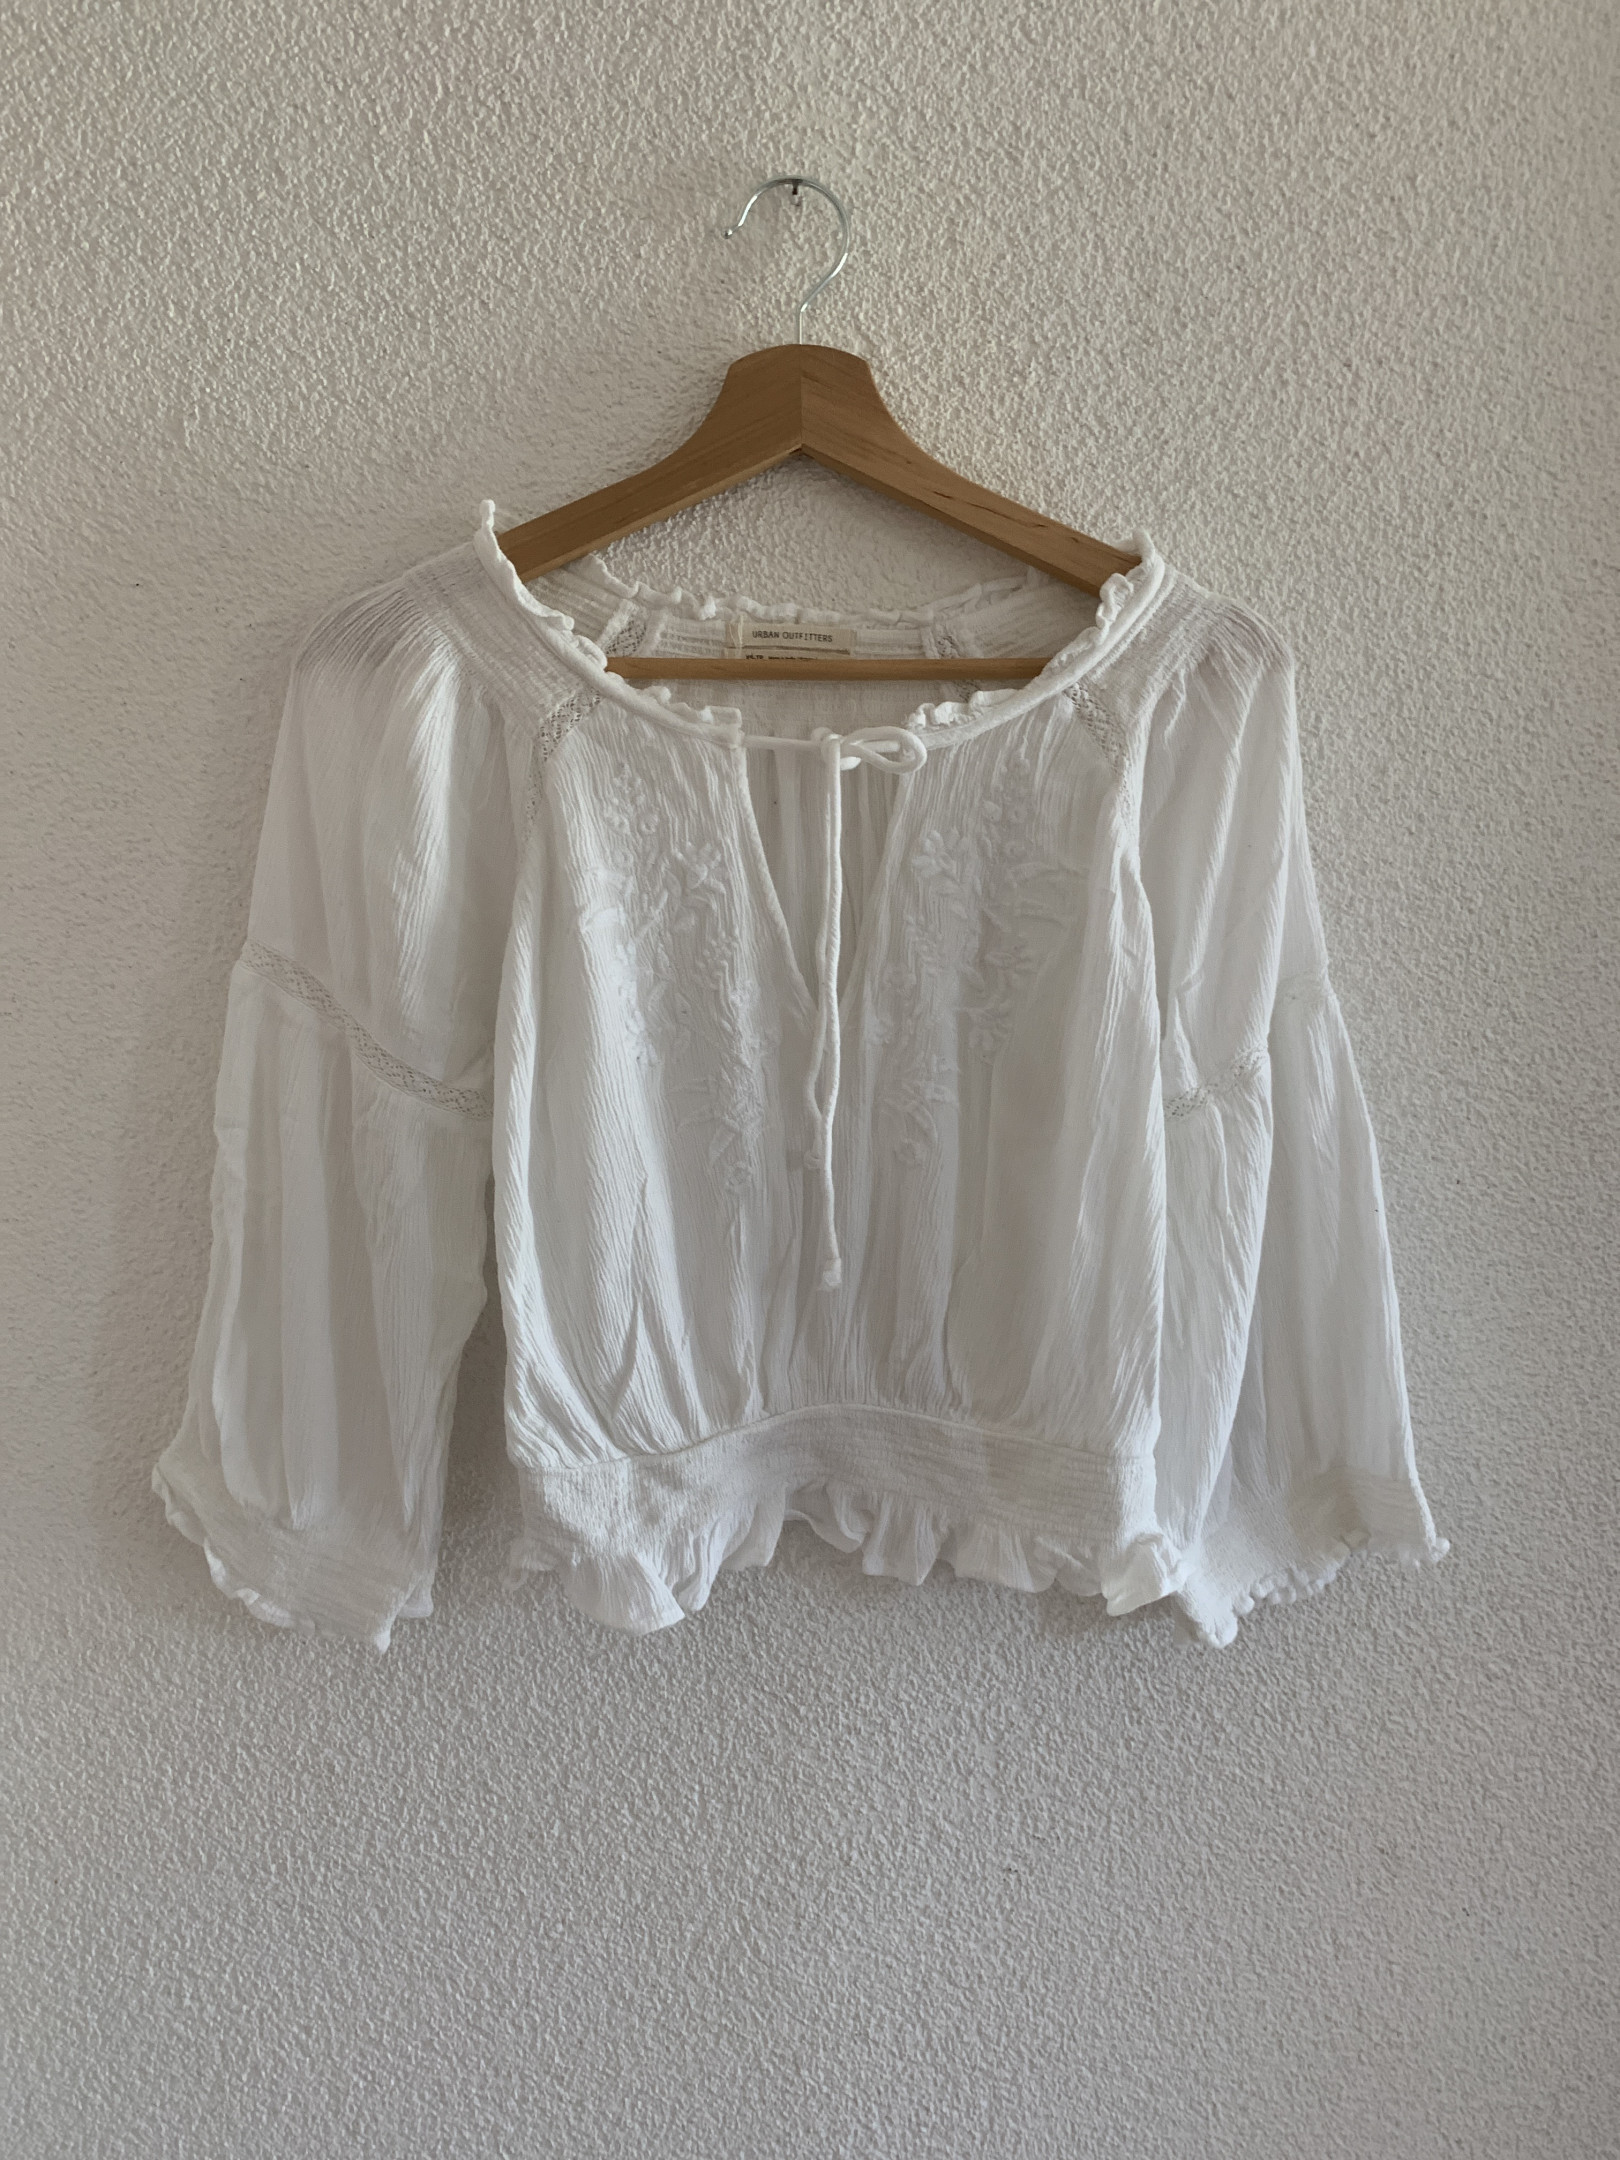 Lightweight white blouse